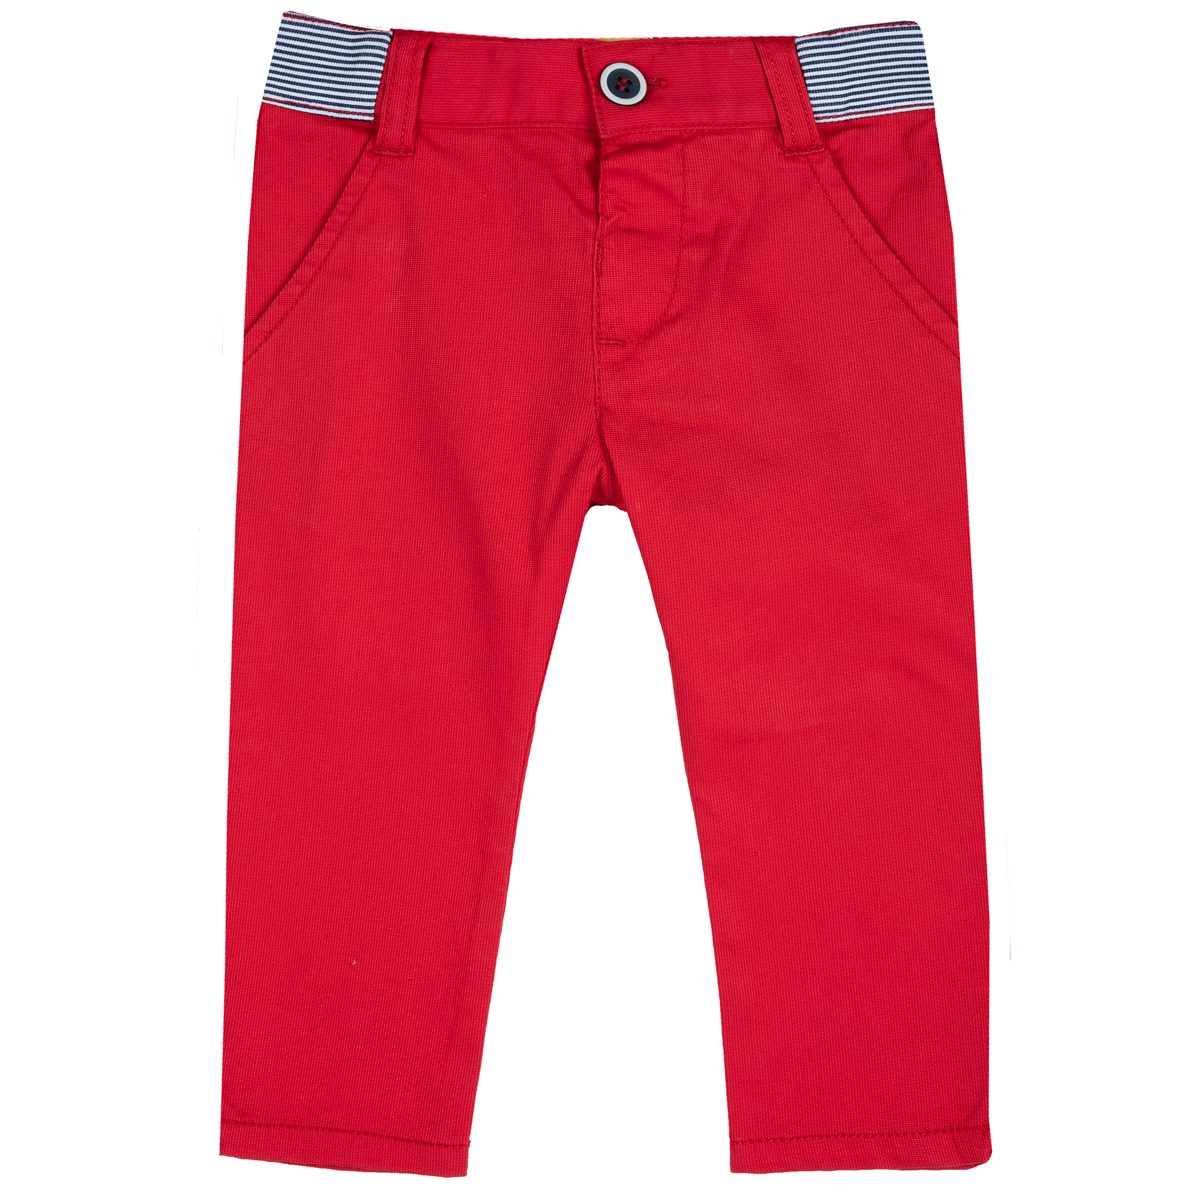 Pantalon lung copii Chicco, elastic, rosu, 08151 08151